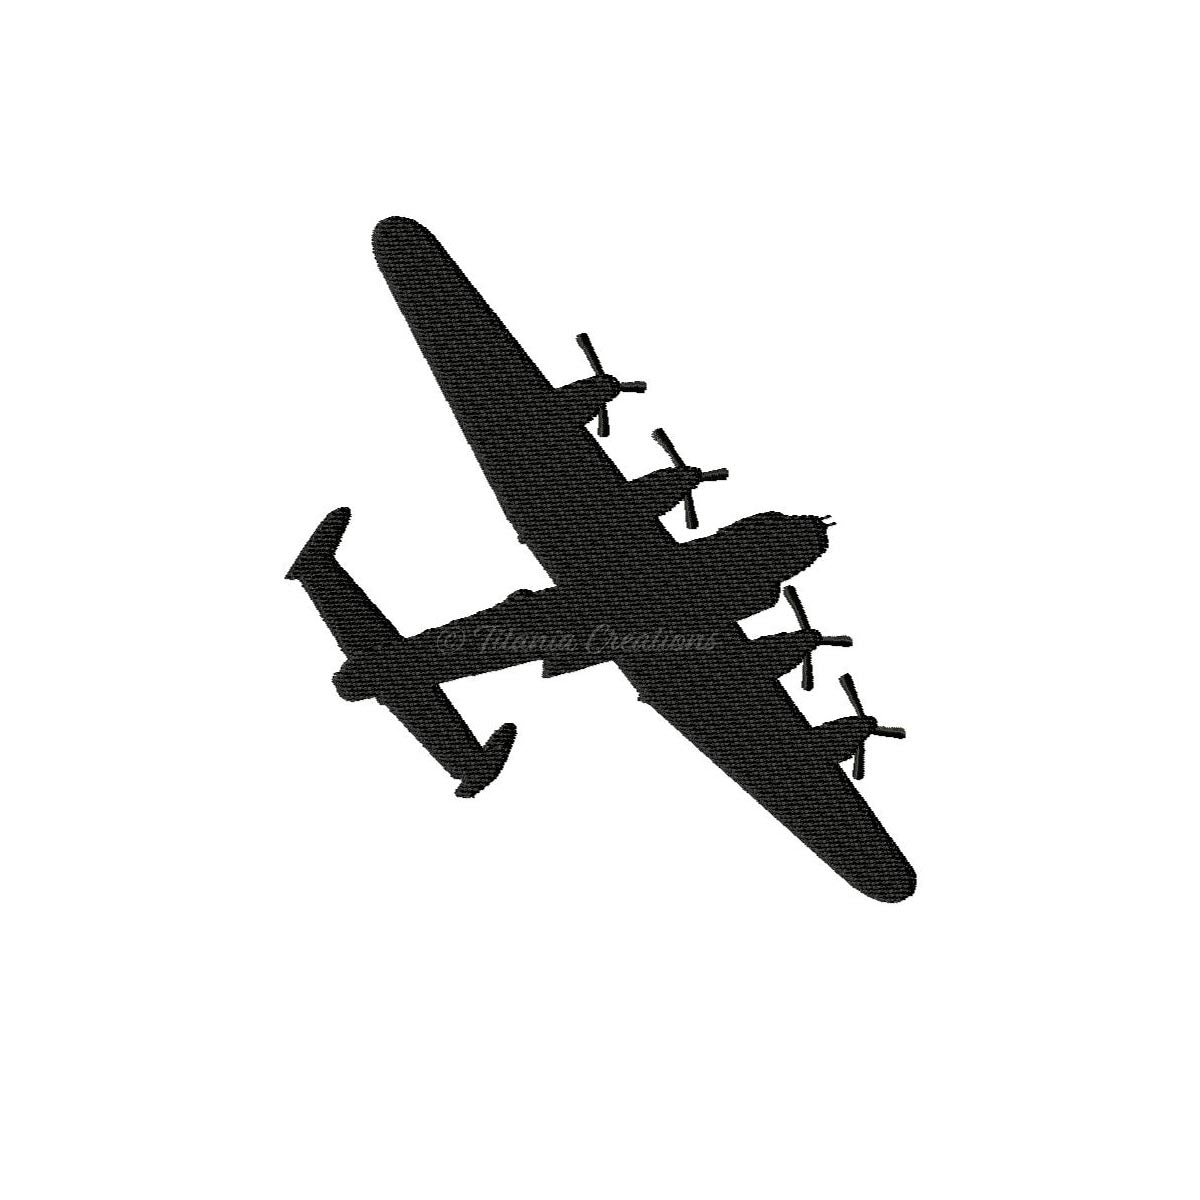 Lancaster Bomber Silhouette 4x4 5x7